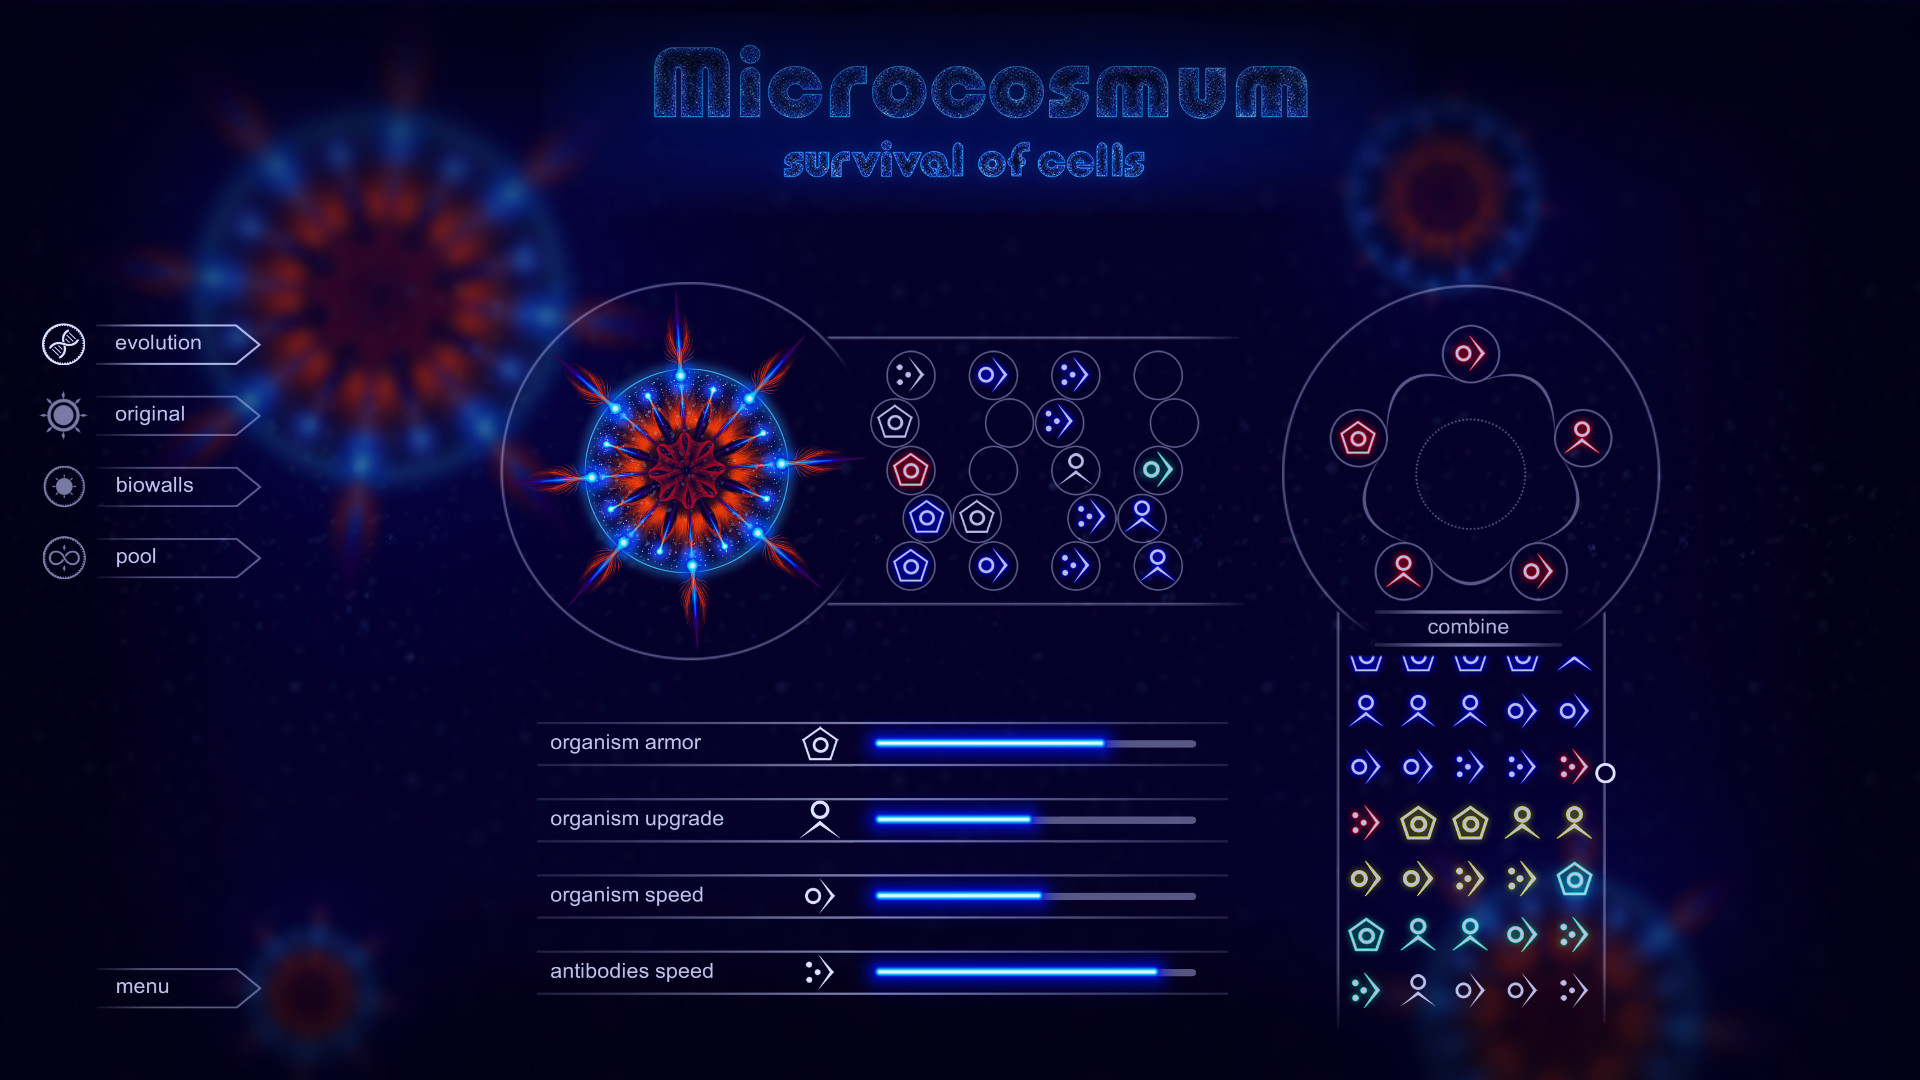 microcosm game